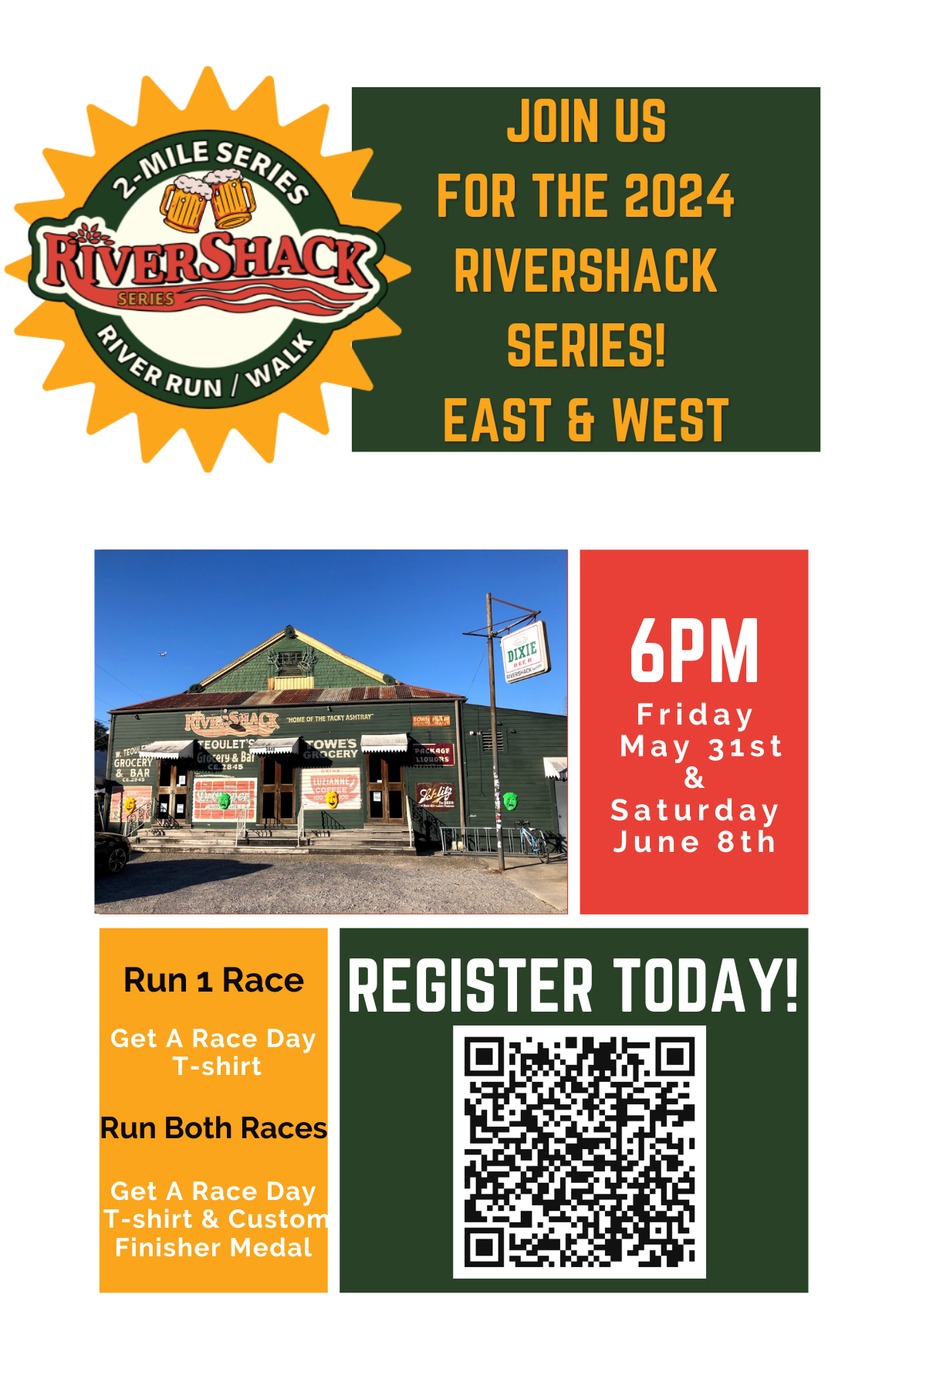 Rivershack Run/Walk event photo